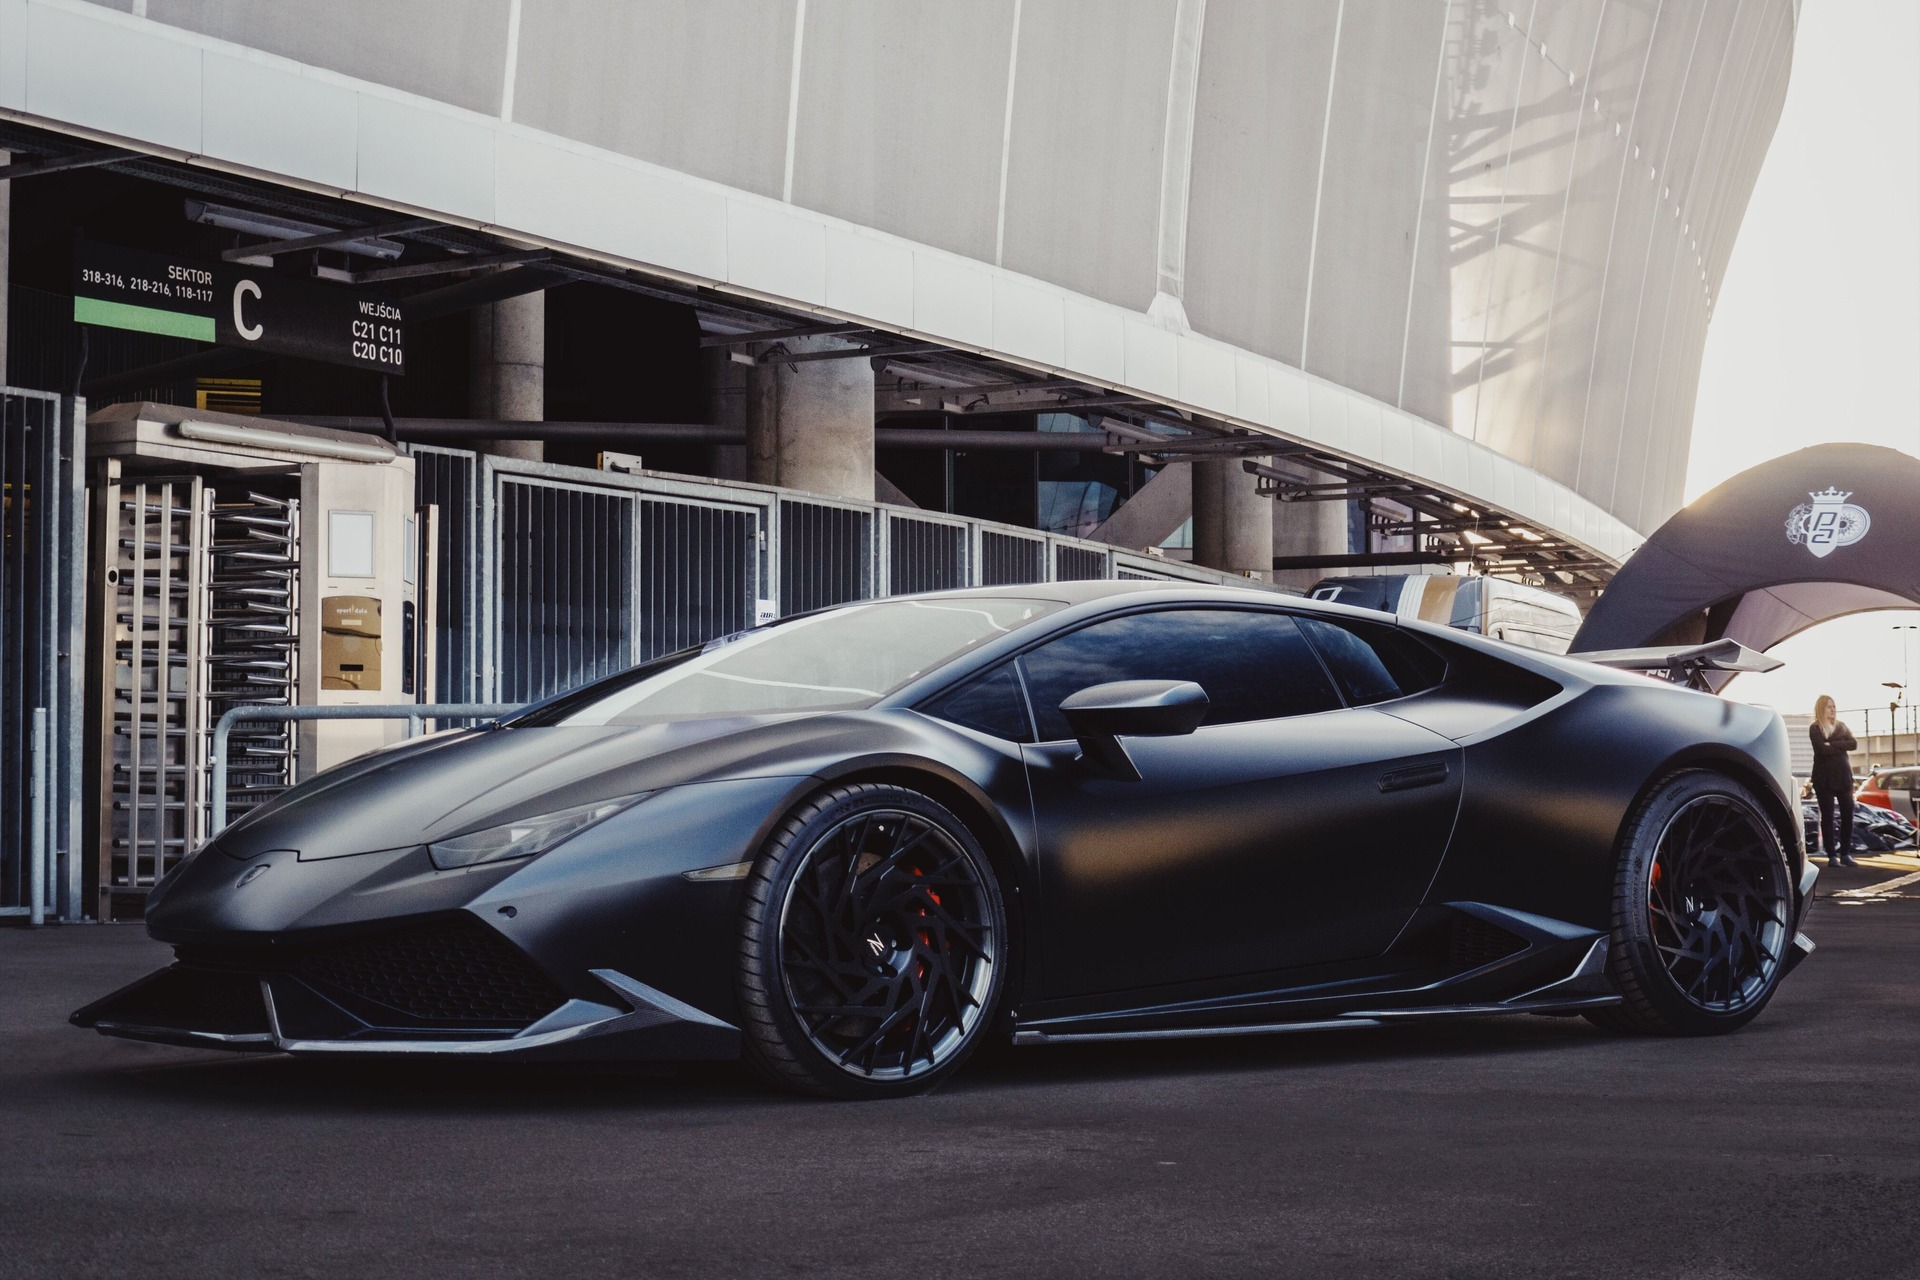 A matte black Lamborghini